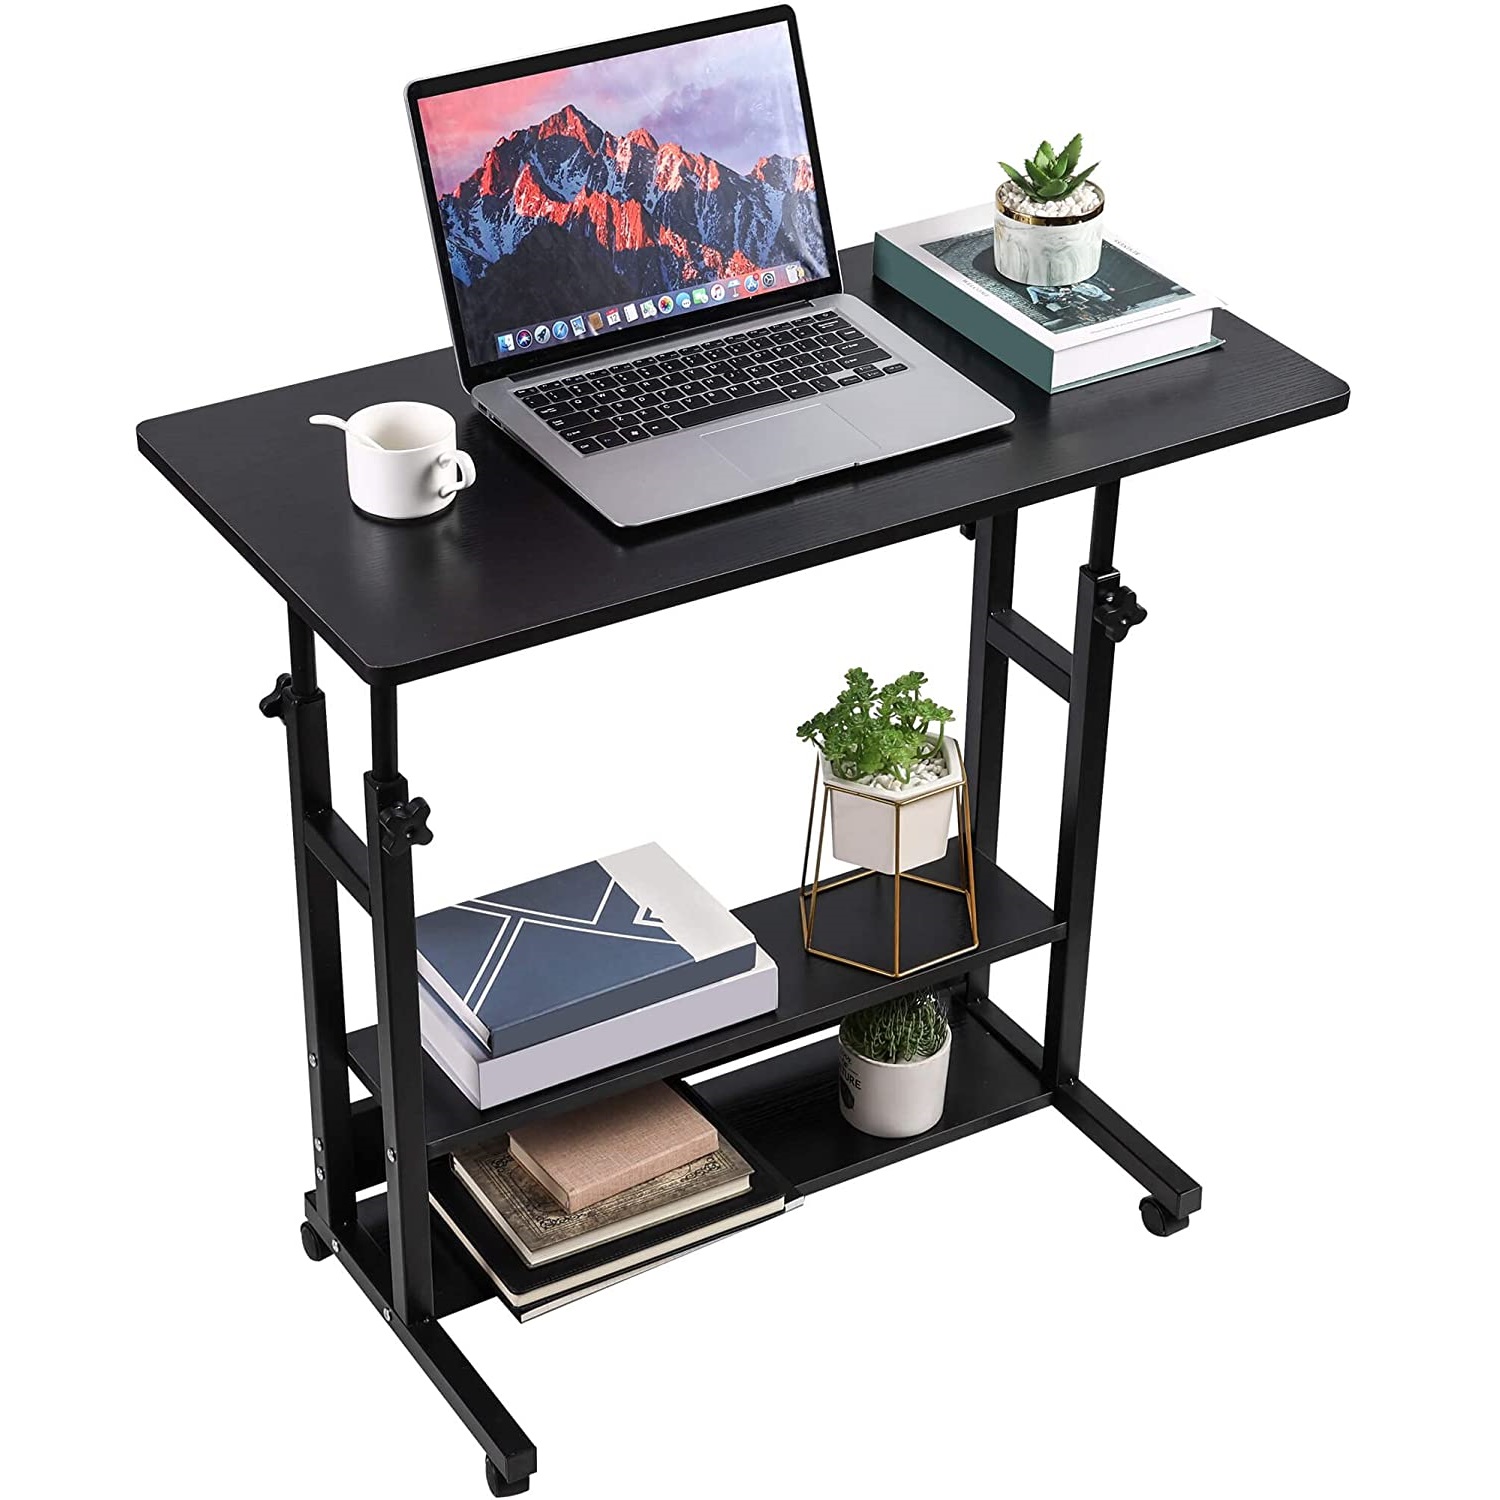 Adjustable Computer Desk with Wheels $44.90 at Amazon (reg. $89.80 ...